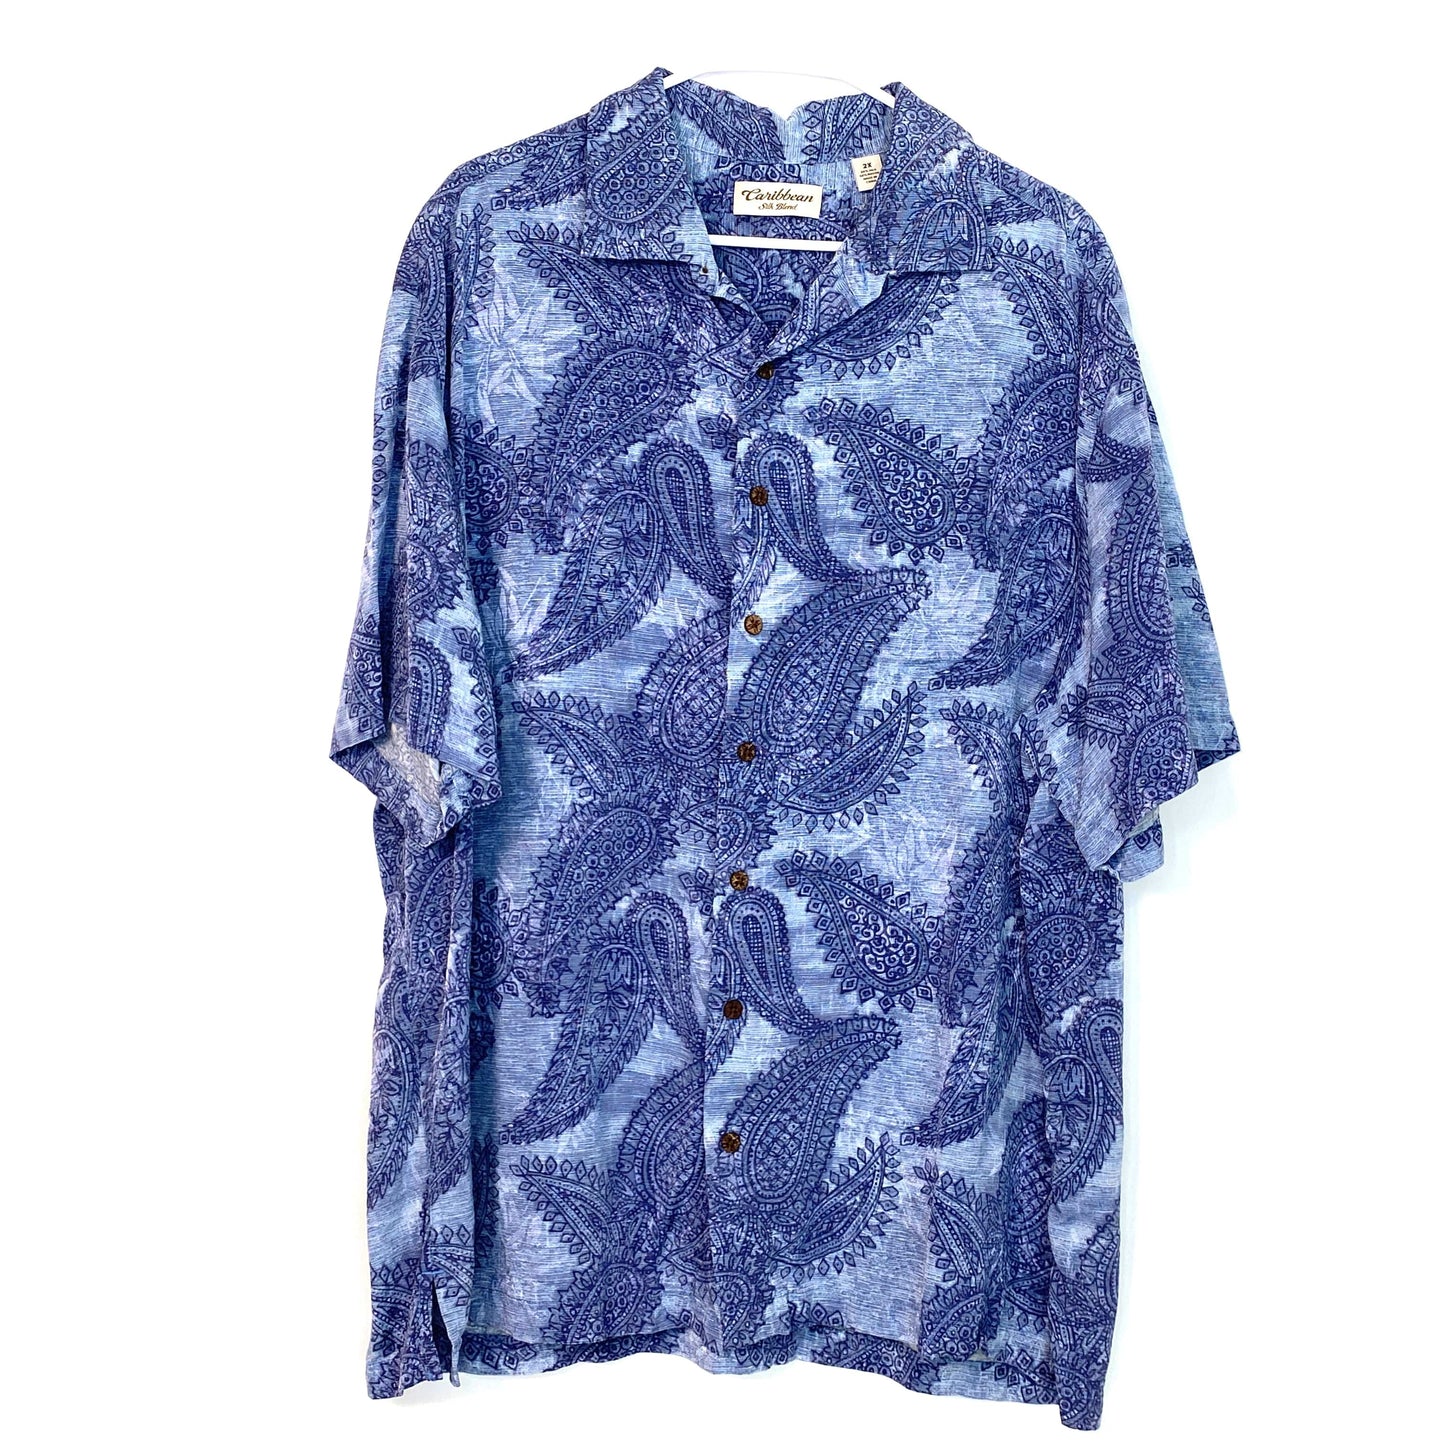 Caribbean Mens Size 2X Blue Hawaiian Shirt Tropical Paisley Pattern Short Sleeve